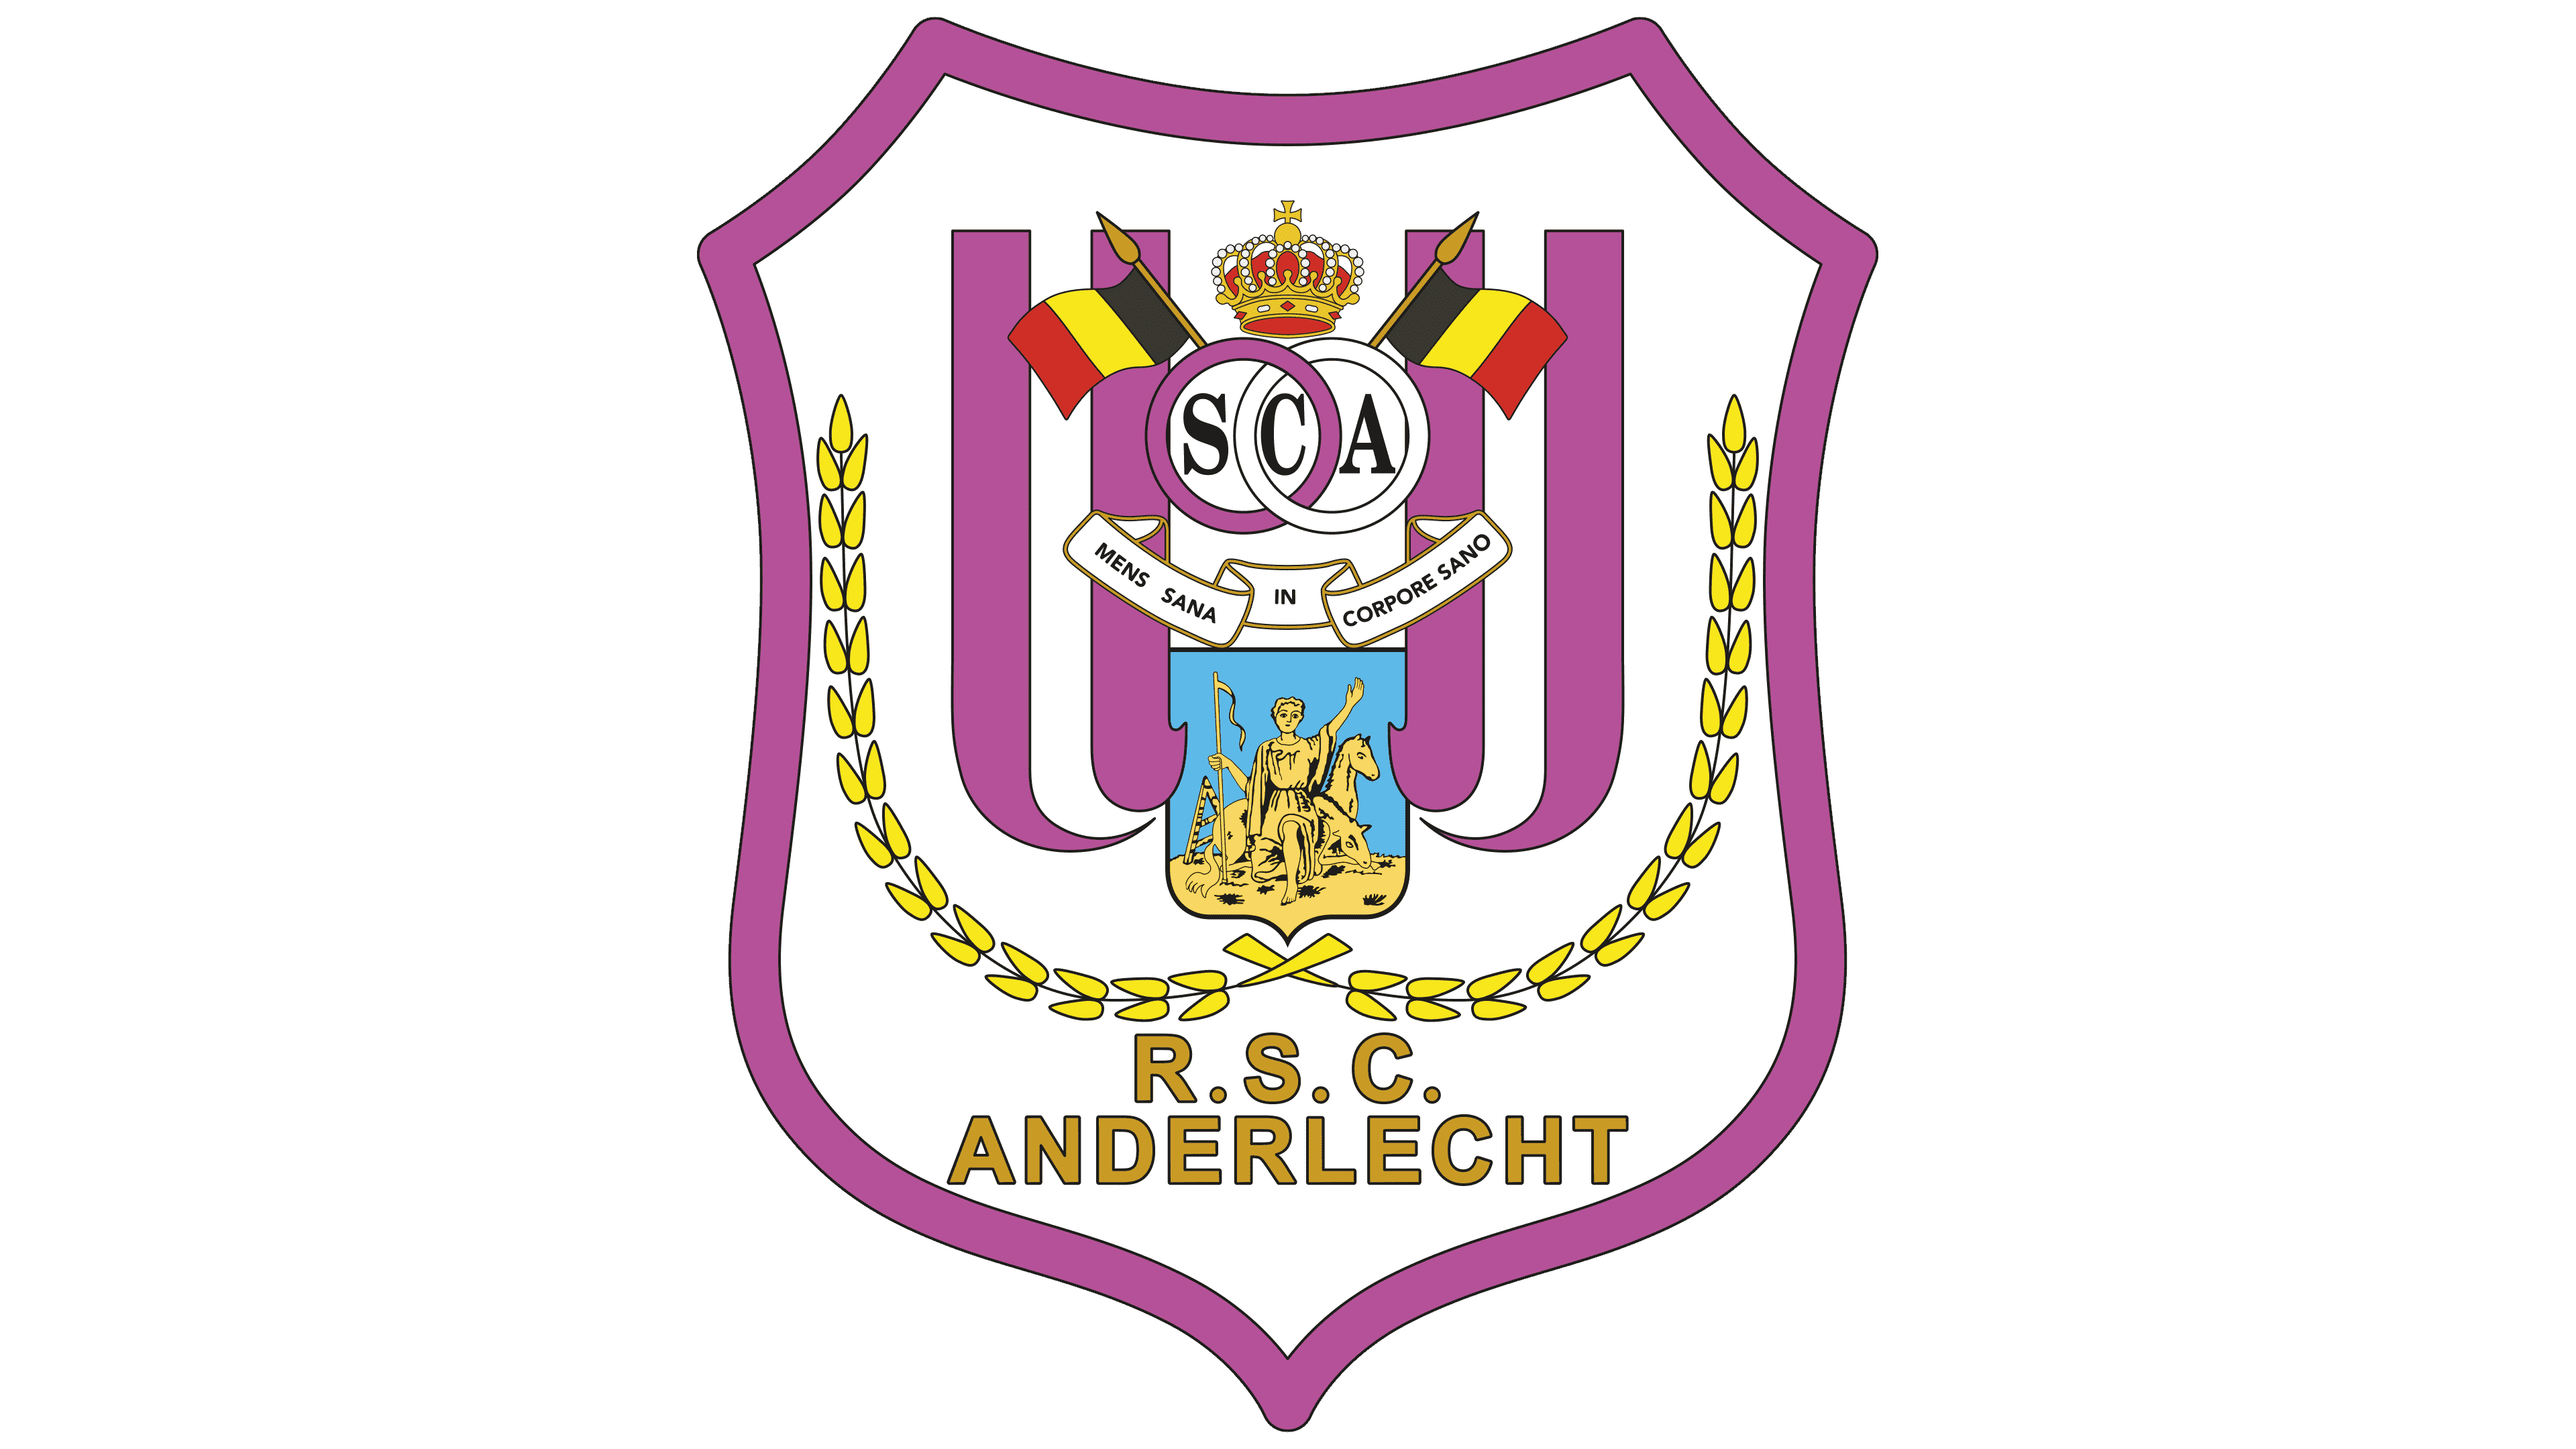 RSC Anderlecht football club history